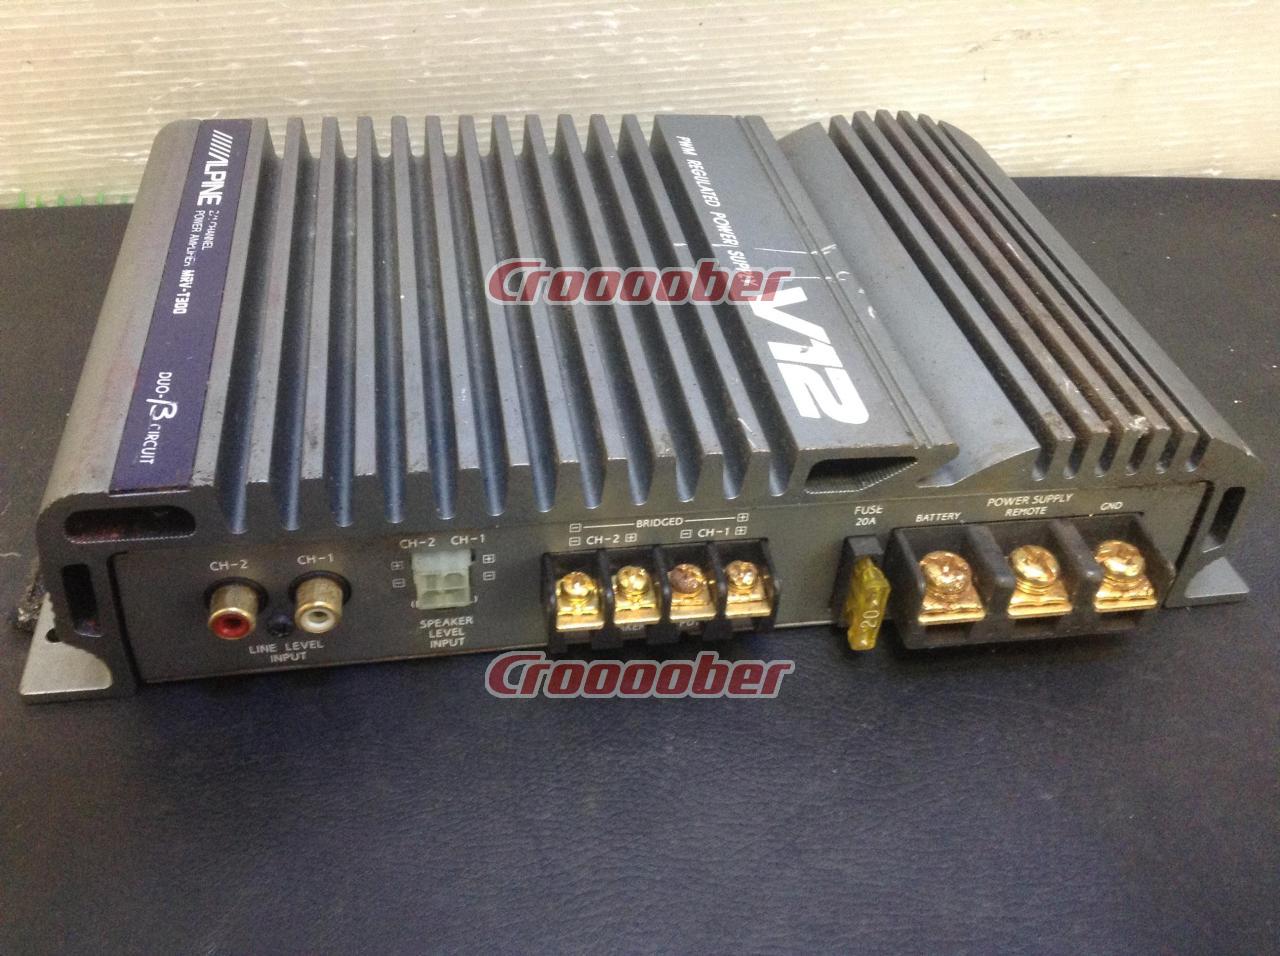 ALPINE MRV-T300 | Amplifier | Croooober